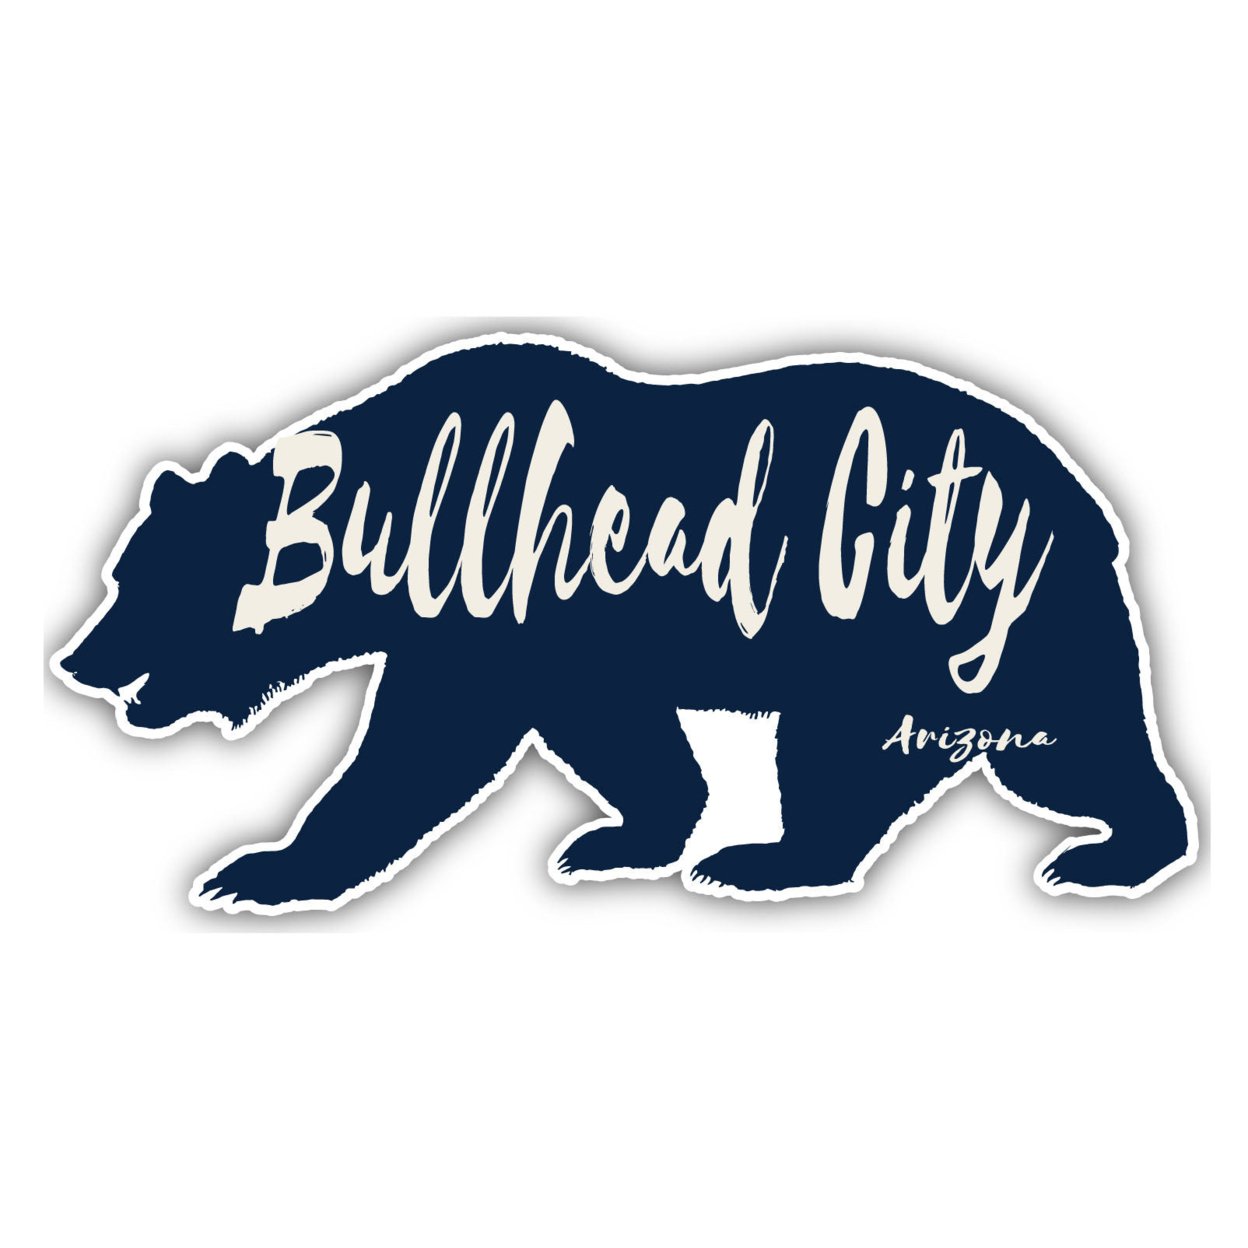 Bullhead City Arizona Souvenir Decorative Stickers (Choose Theme And Size) - Single Unit, 12-Inch, Bear